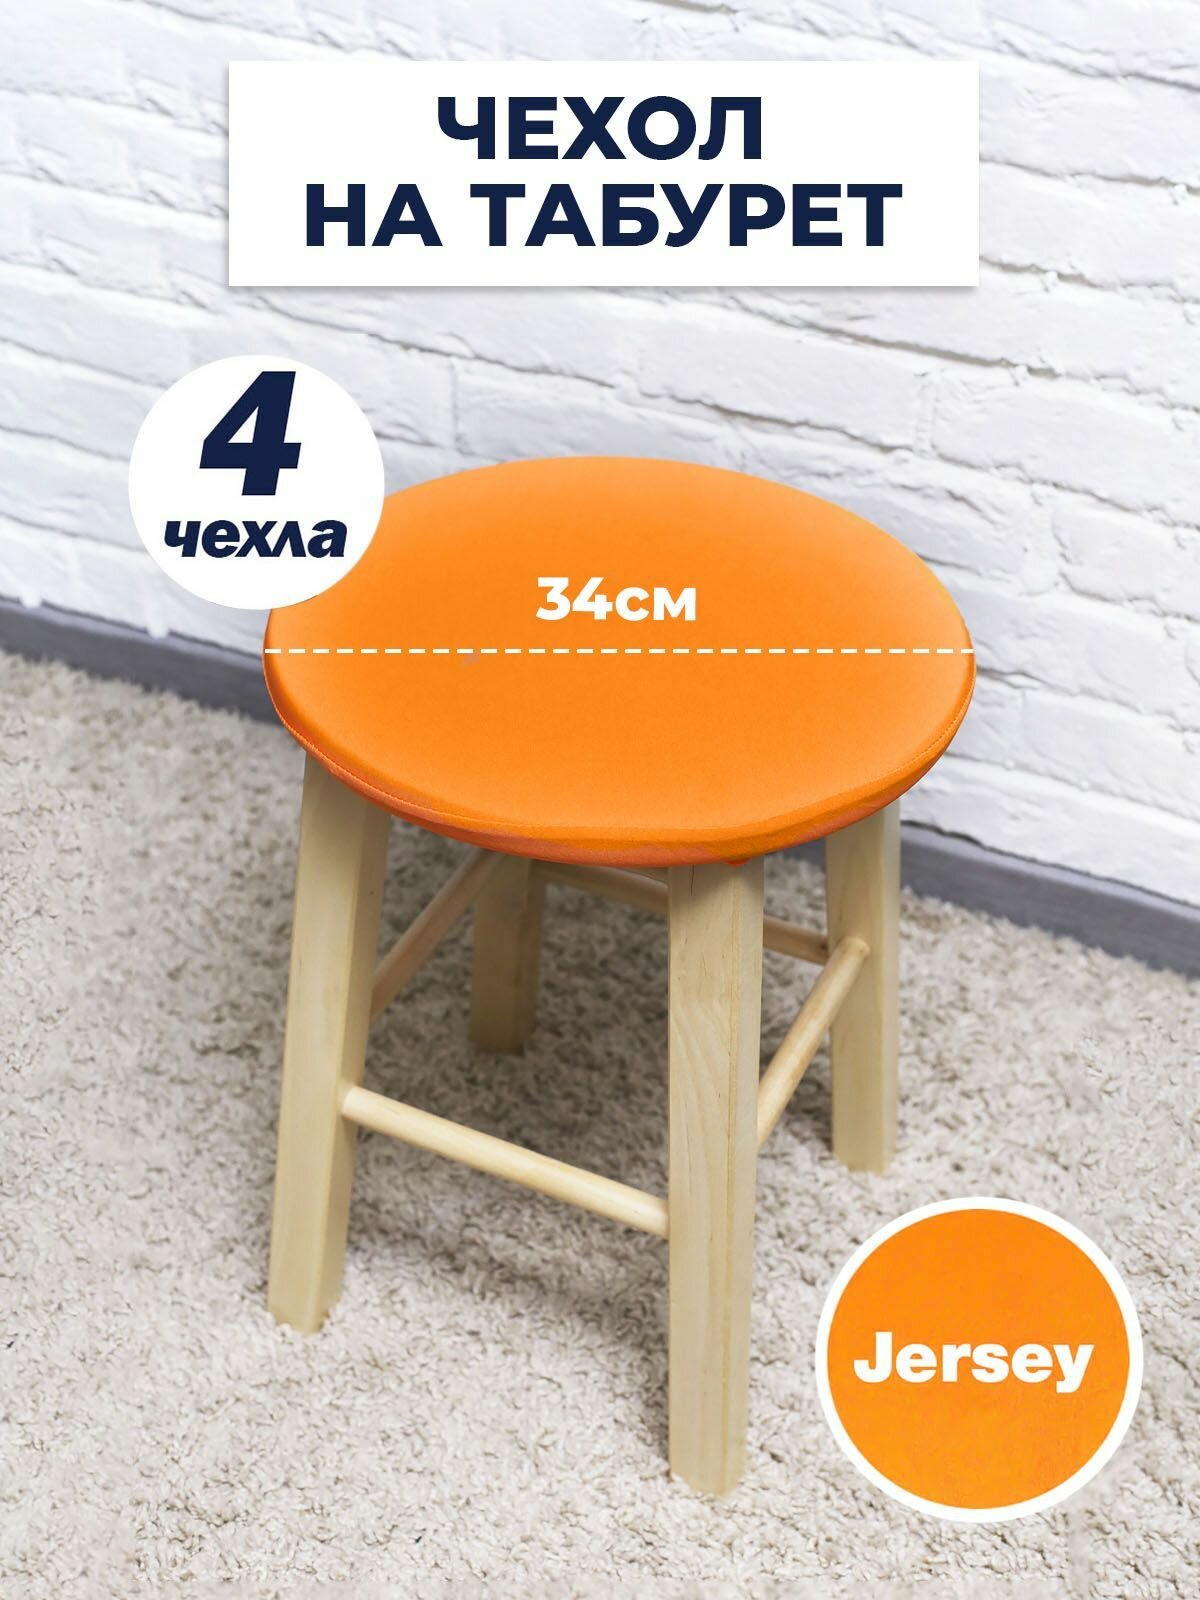 Чехол для табурета, чехол на табурет, на стул без спинки, Коллекция "Jersey" Оранжевый, Комплект 4 шт.